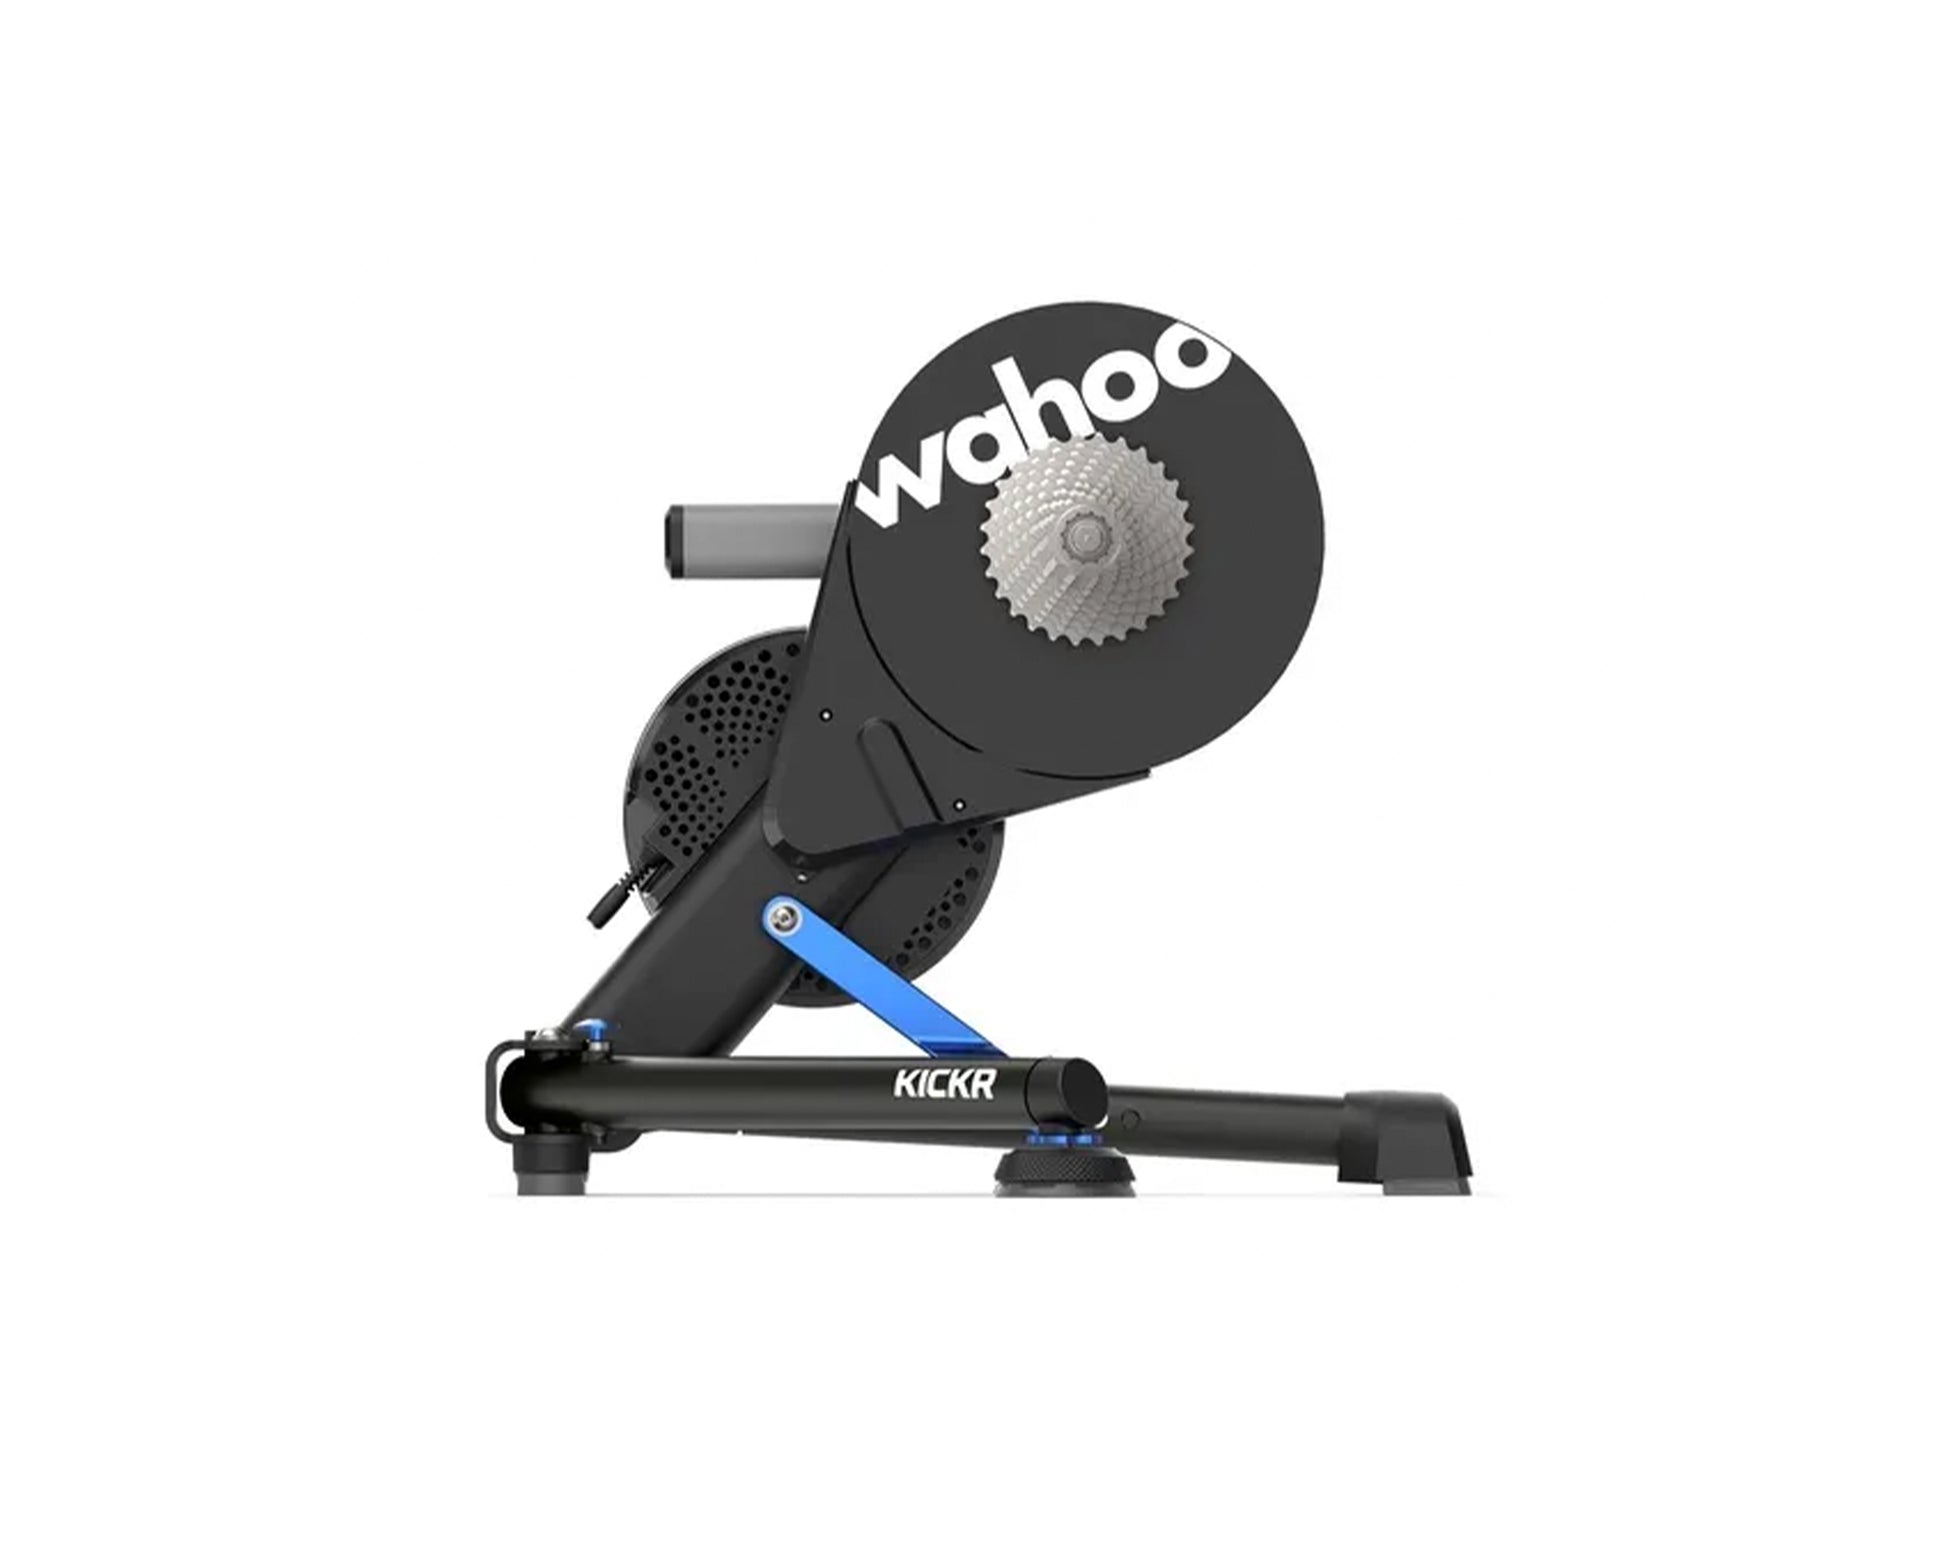 Wahoo Fitness Kickr V6 WiFi Home Trainer